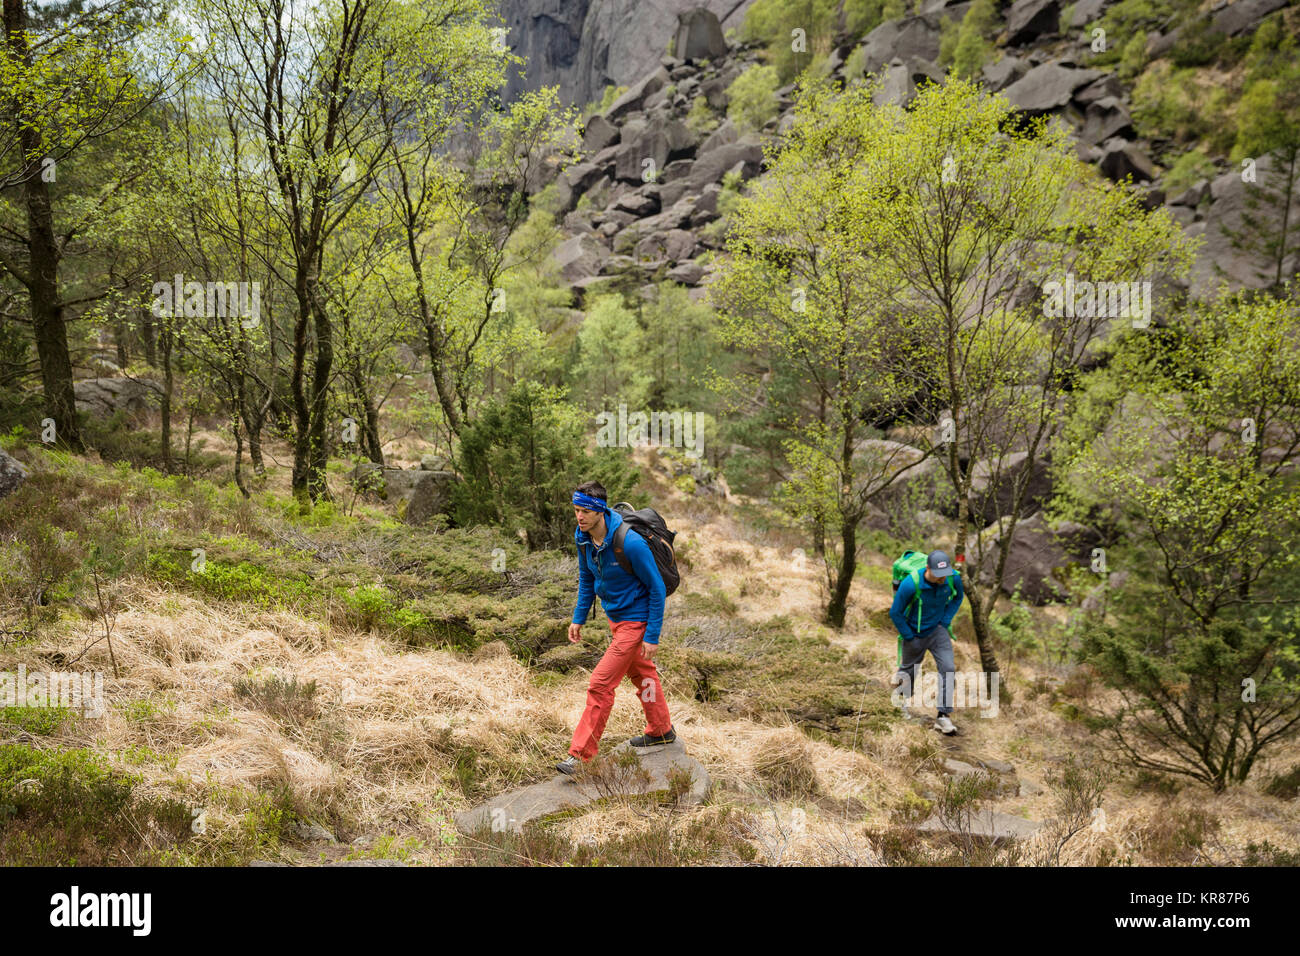 Rock climbers walk through a wood to a climbing route Stock Photo